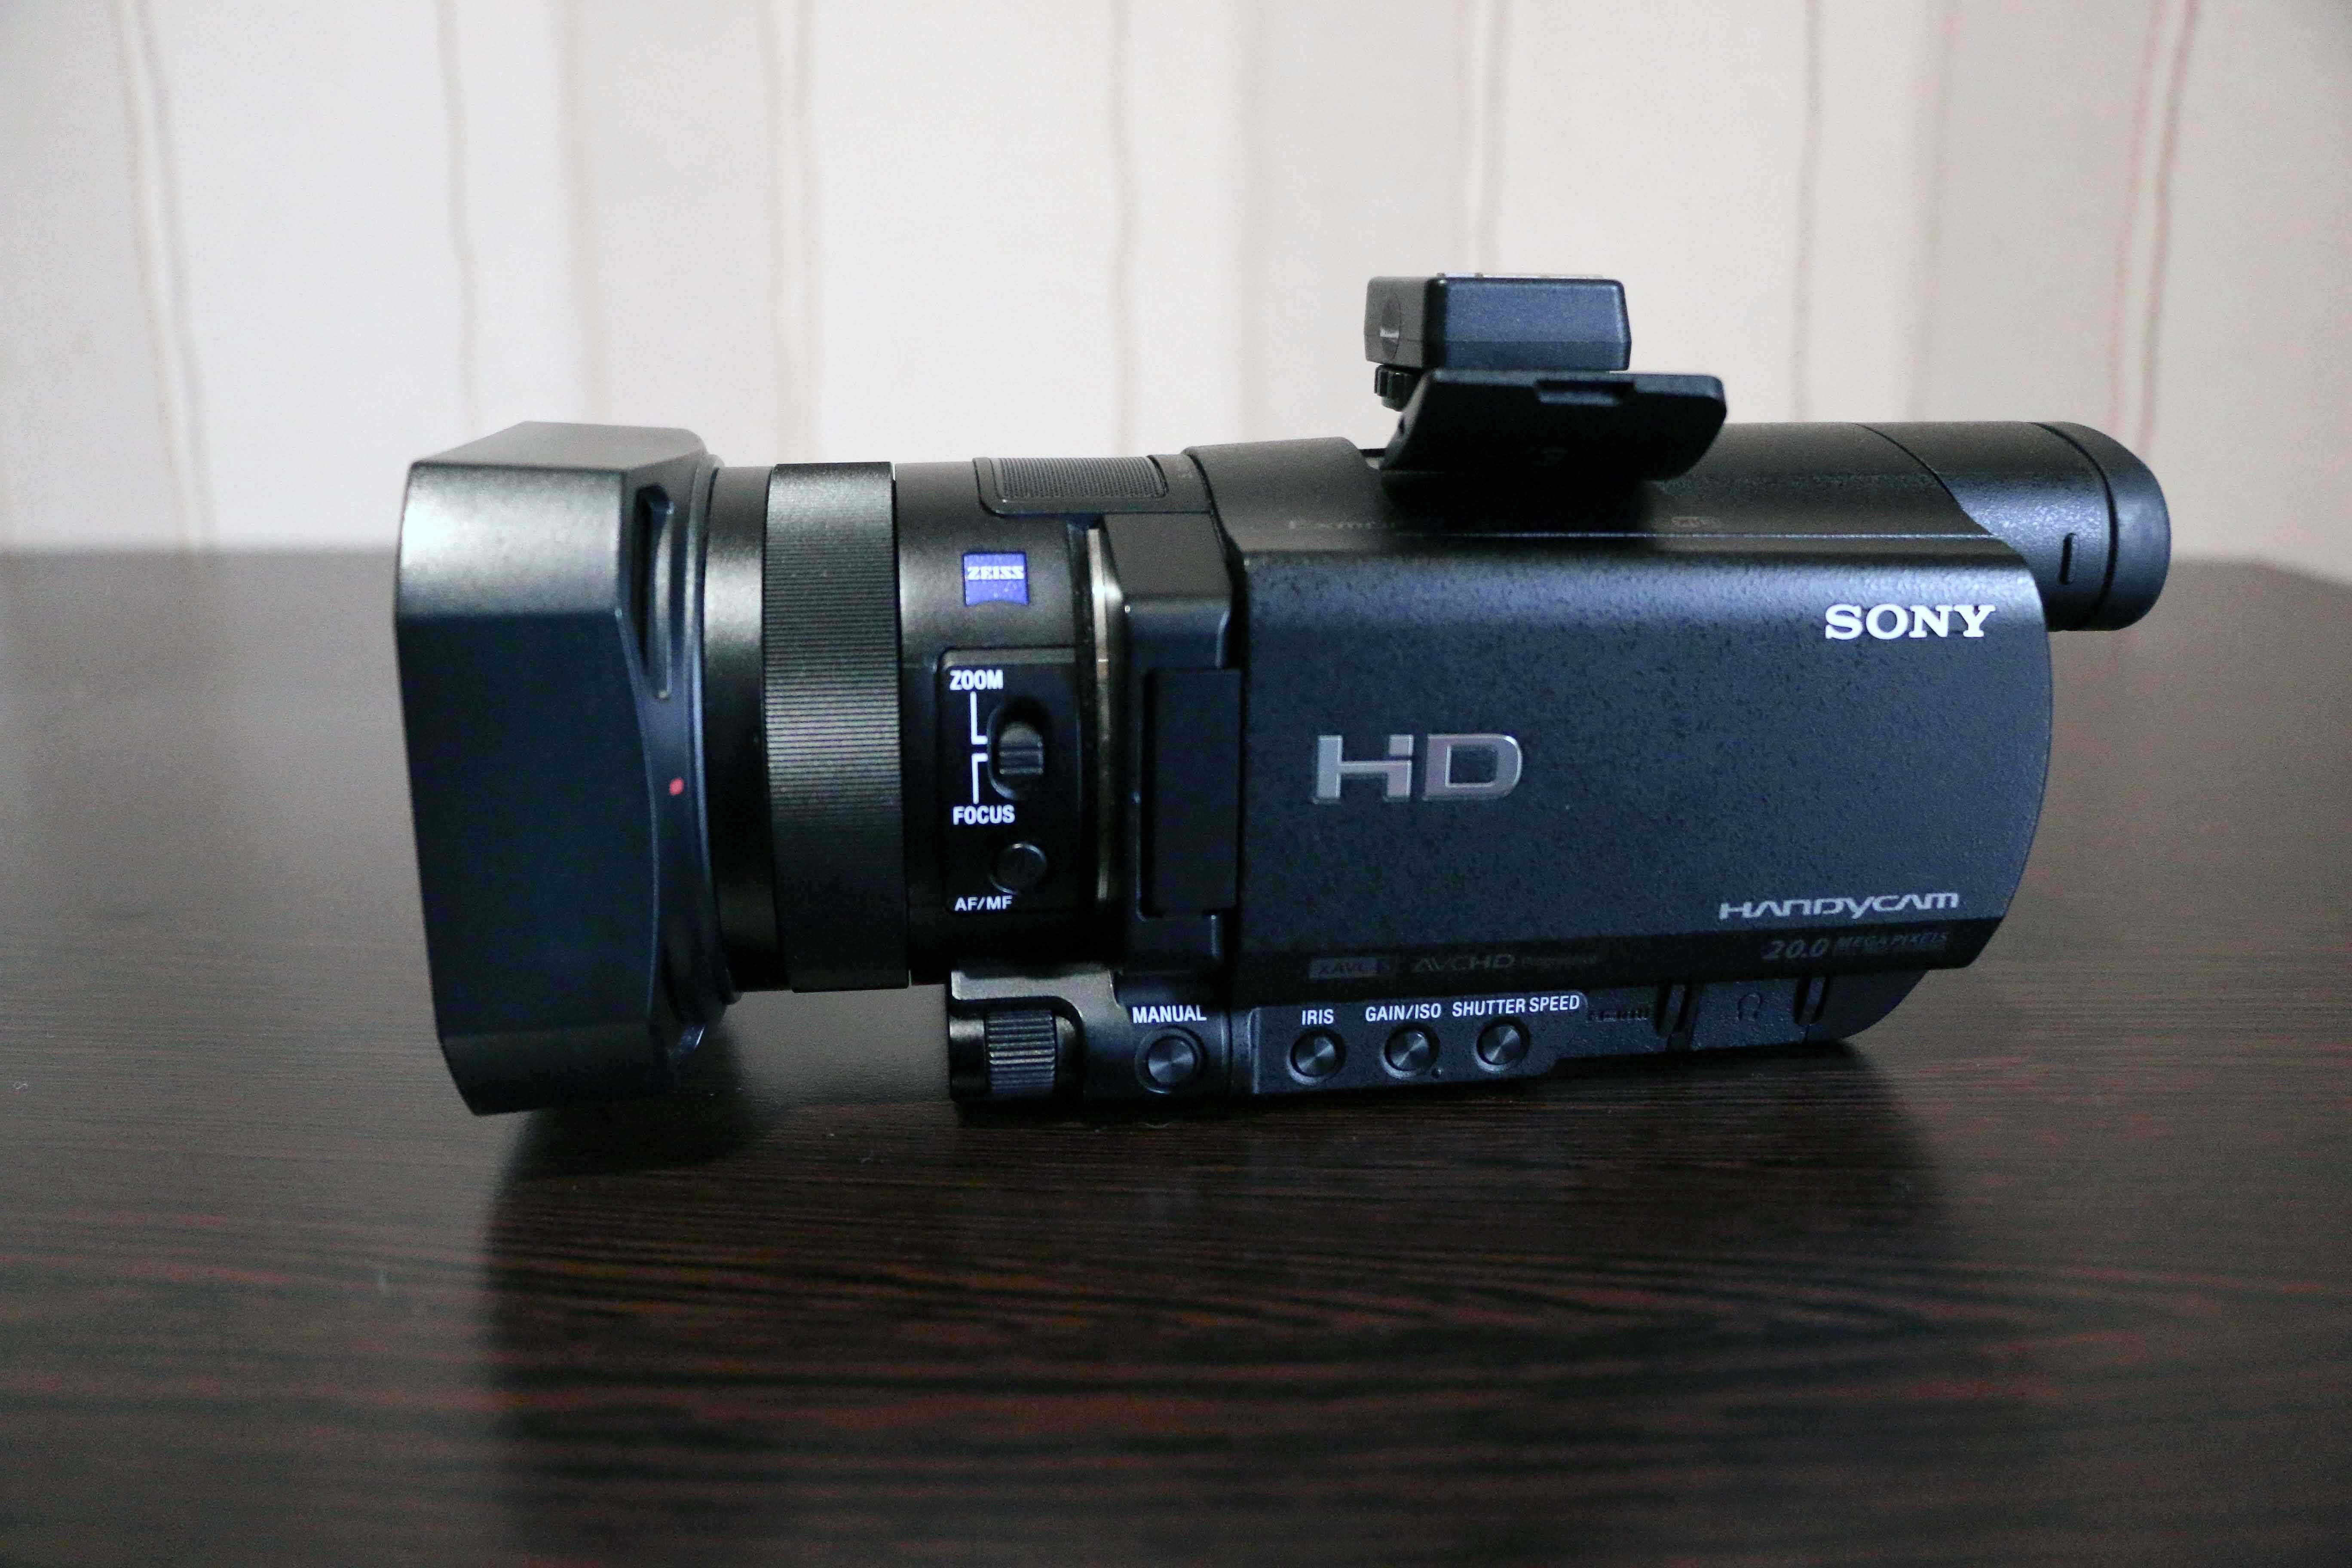 camera video sony hdr-cx900e full hd, optica zeiss ,nfc wi fi